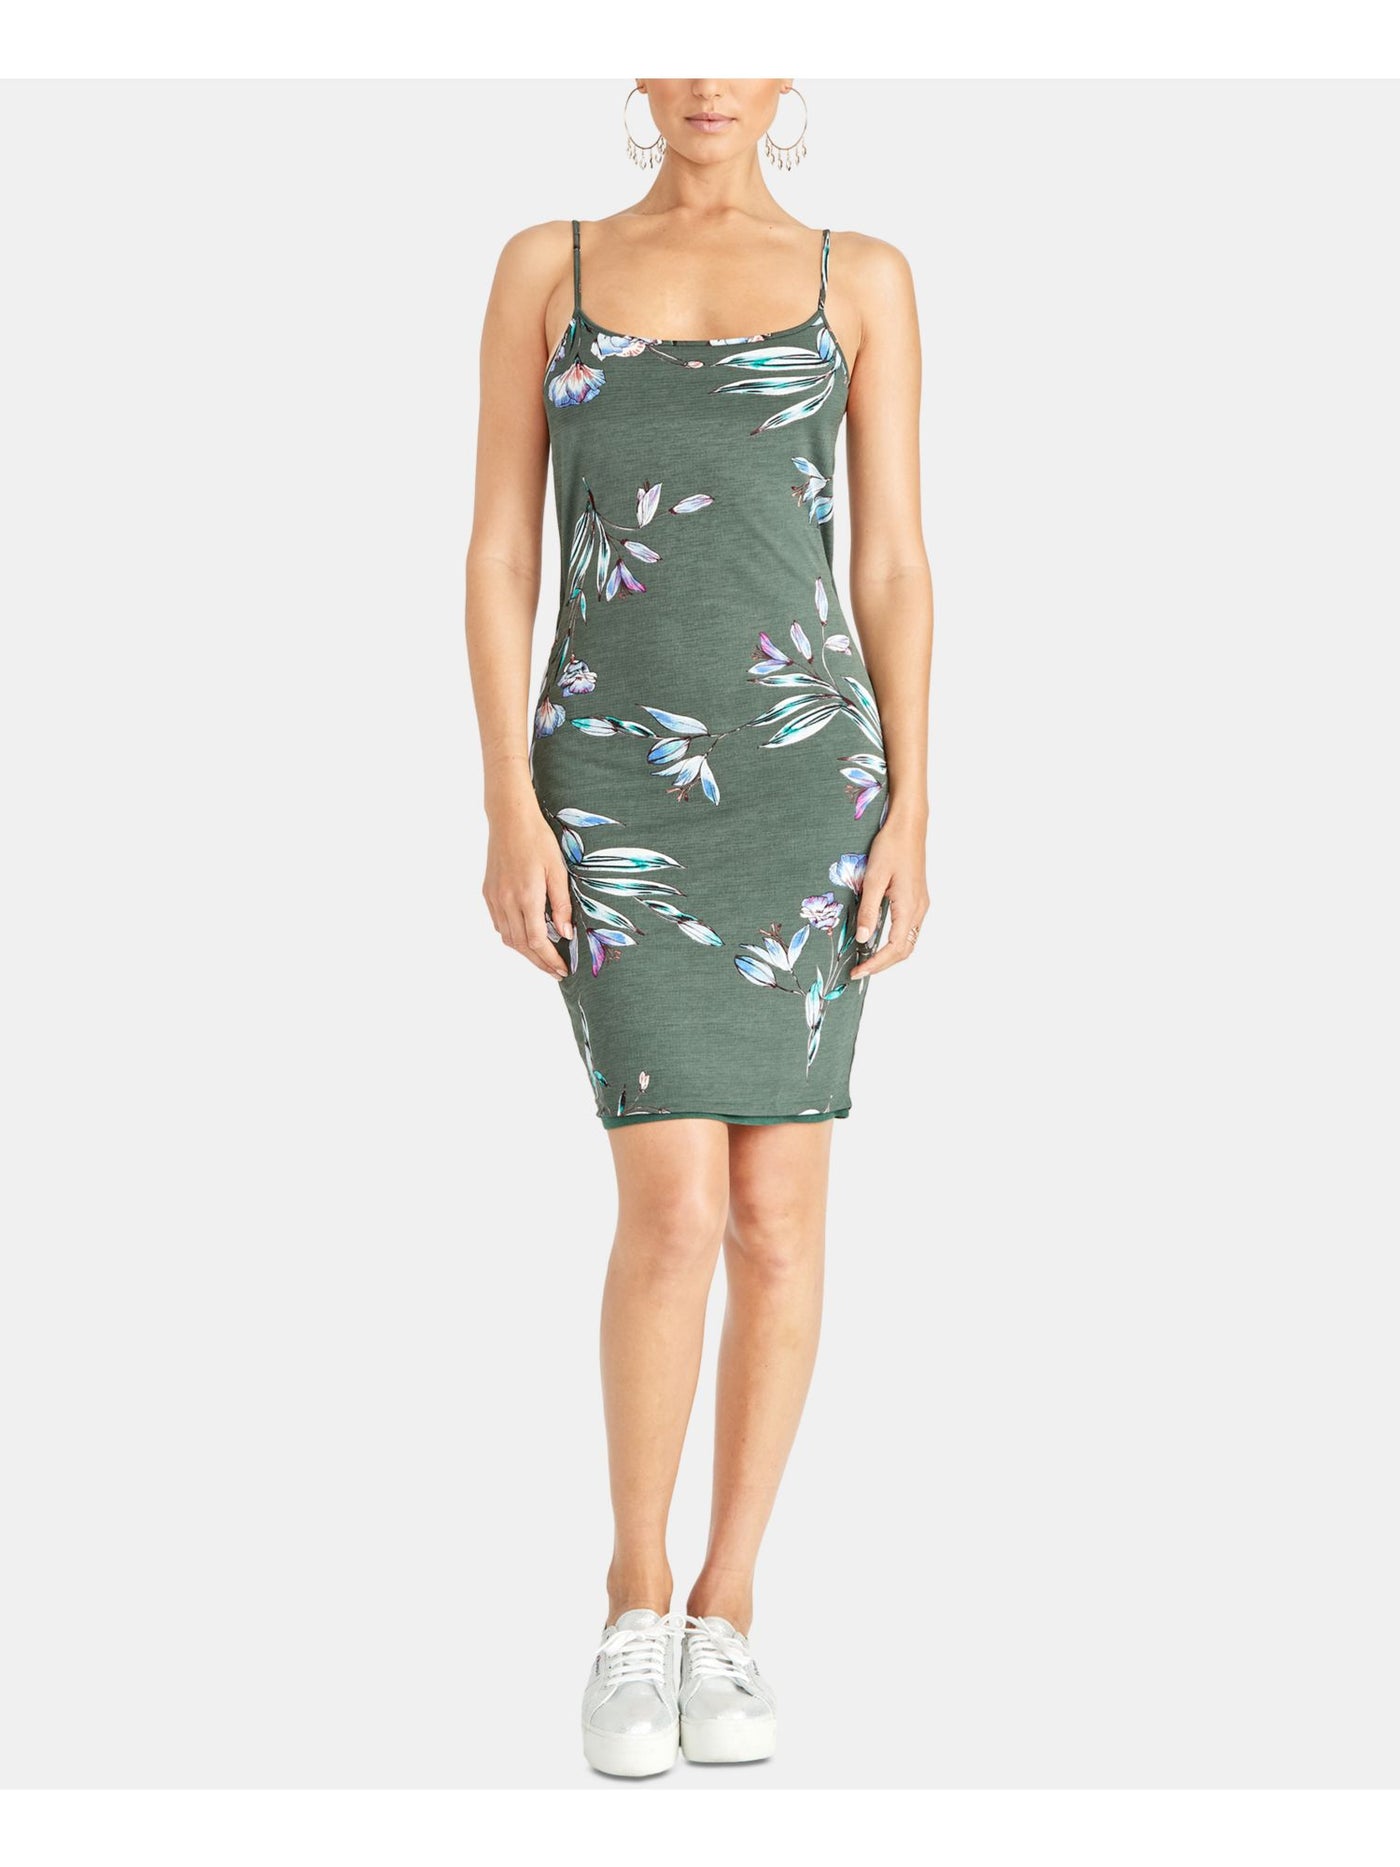 RACHEL ROY Womens Green Spaghetti Strap Above The Knee Body Con Dress XXL